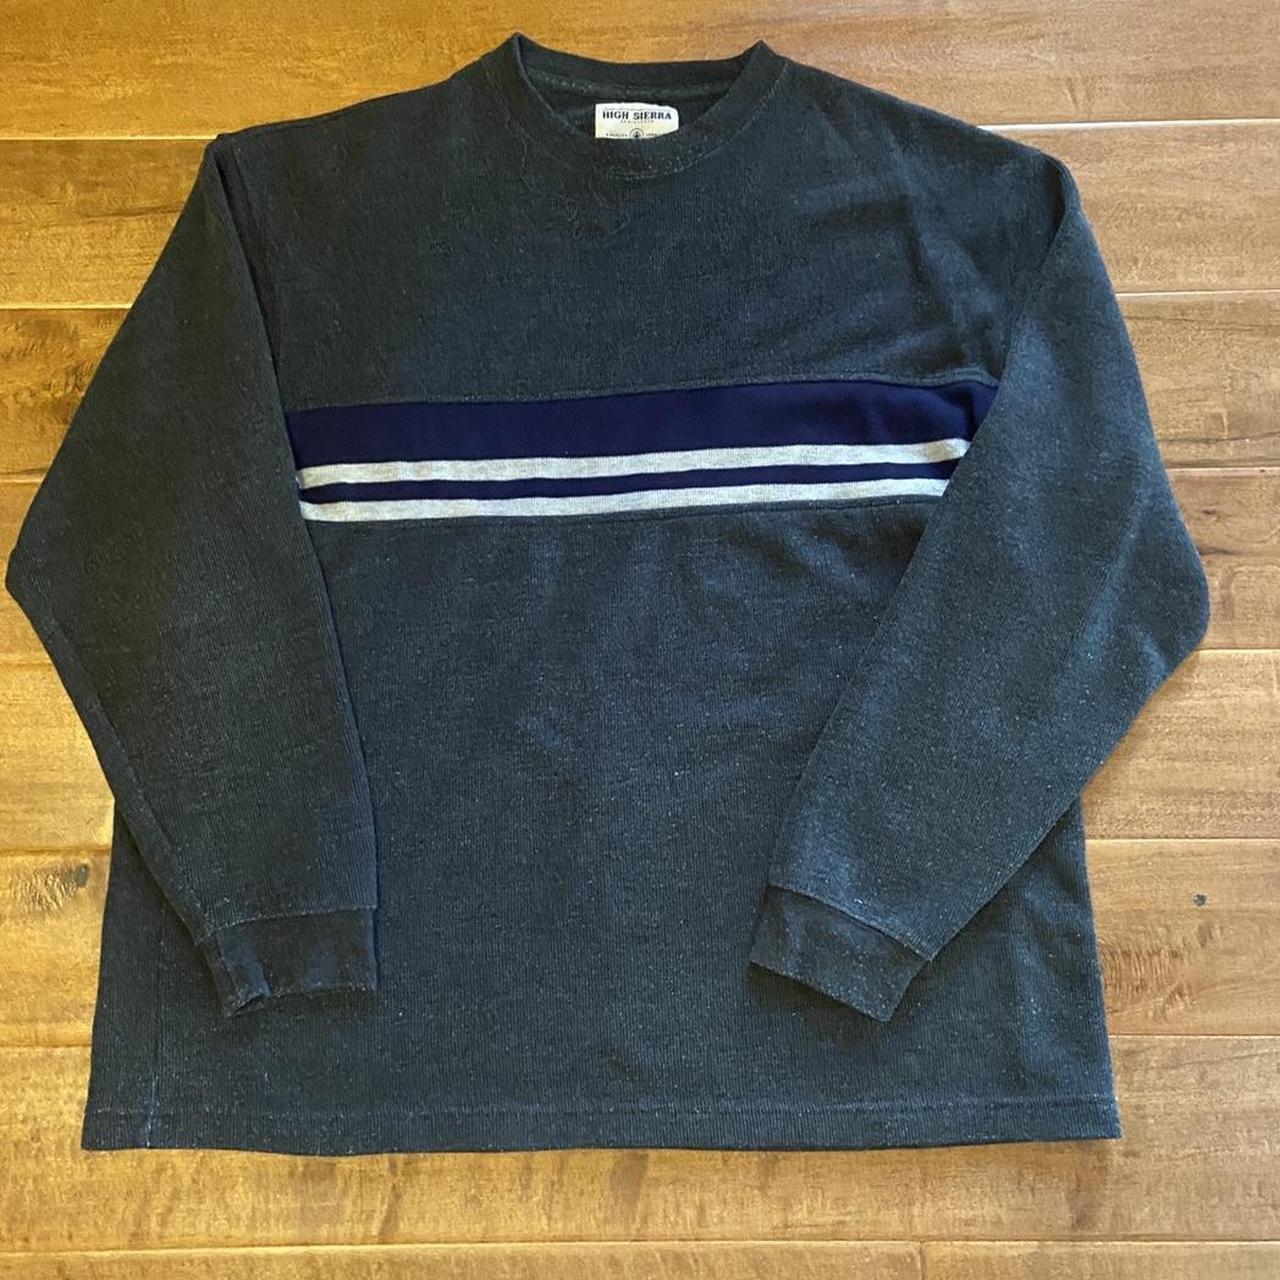 Vintage High Siera Sweater Mens L Great... - Depop